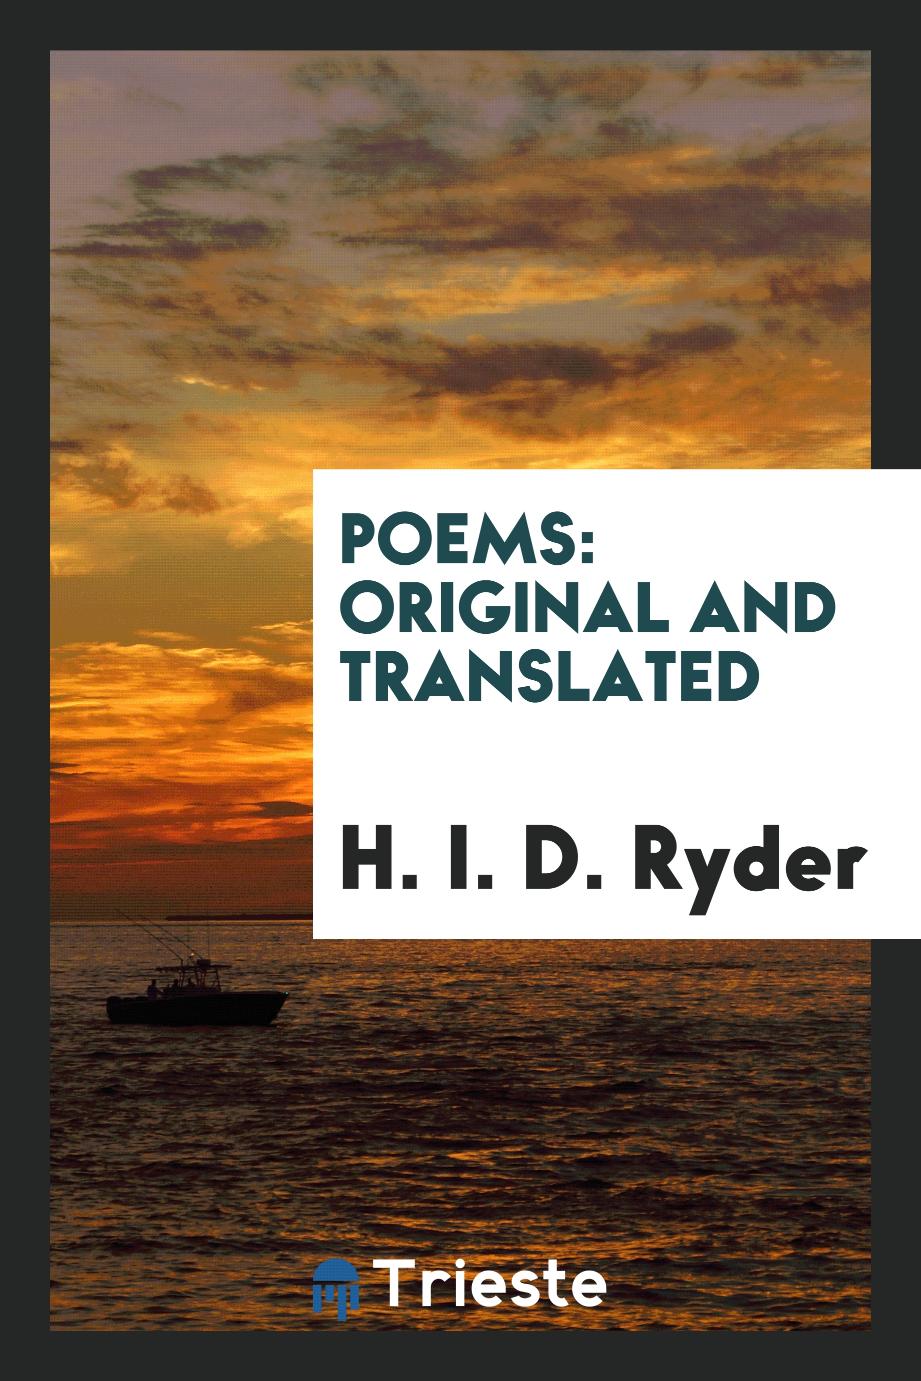 Poems: original and translated